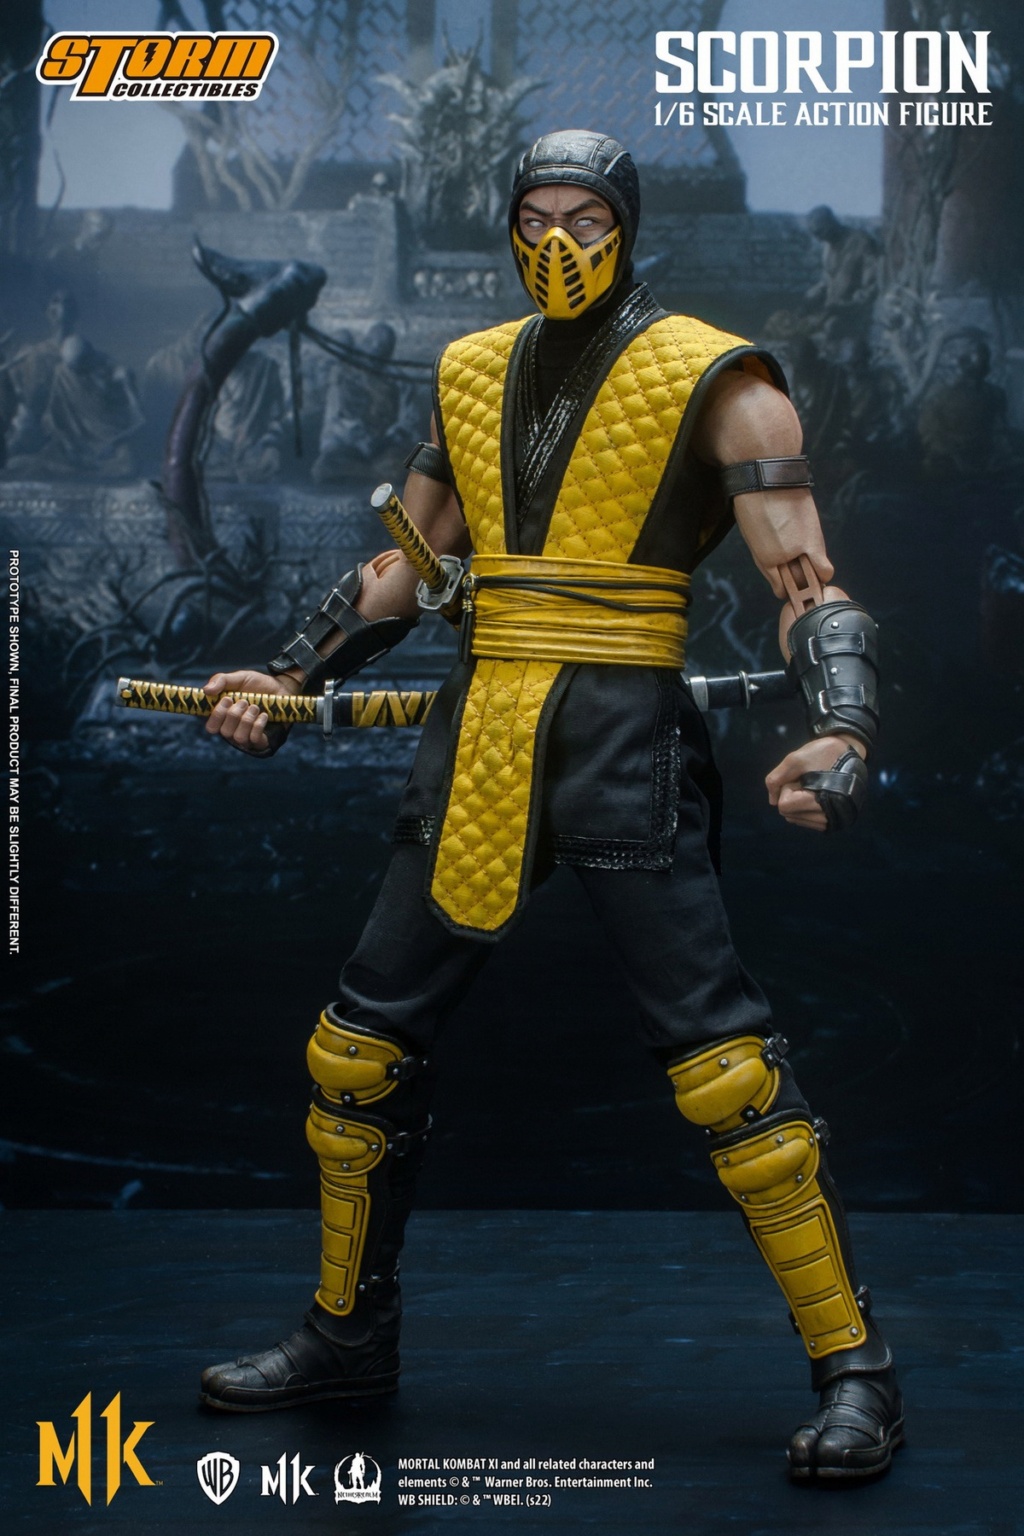 Scorpion - NEW PRODUCT: Storm Toys: 1/6 "Mortal Kombat" Series - Scorpion/Scorpion Action Figure 071dce10